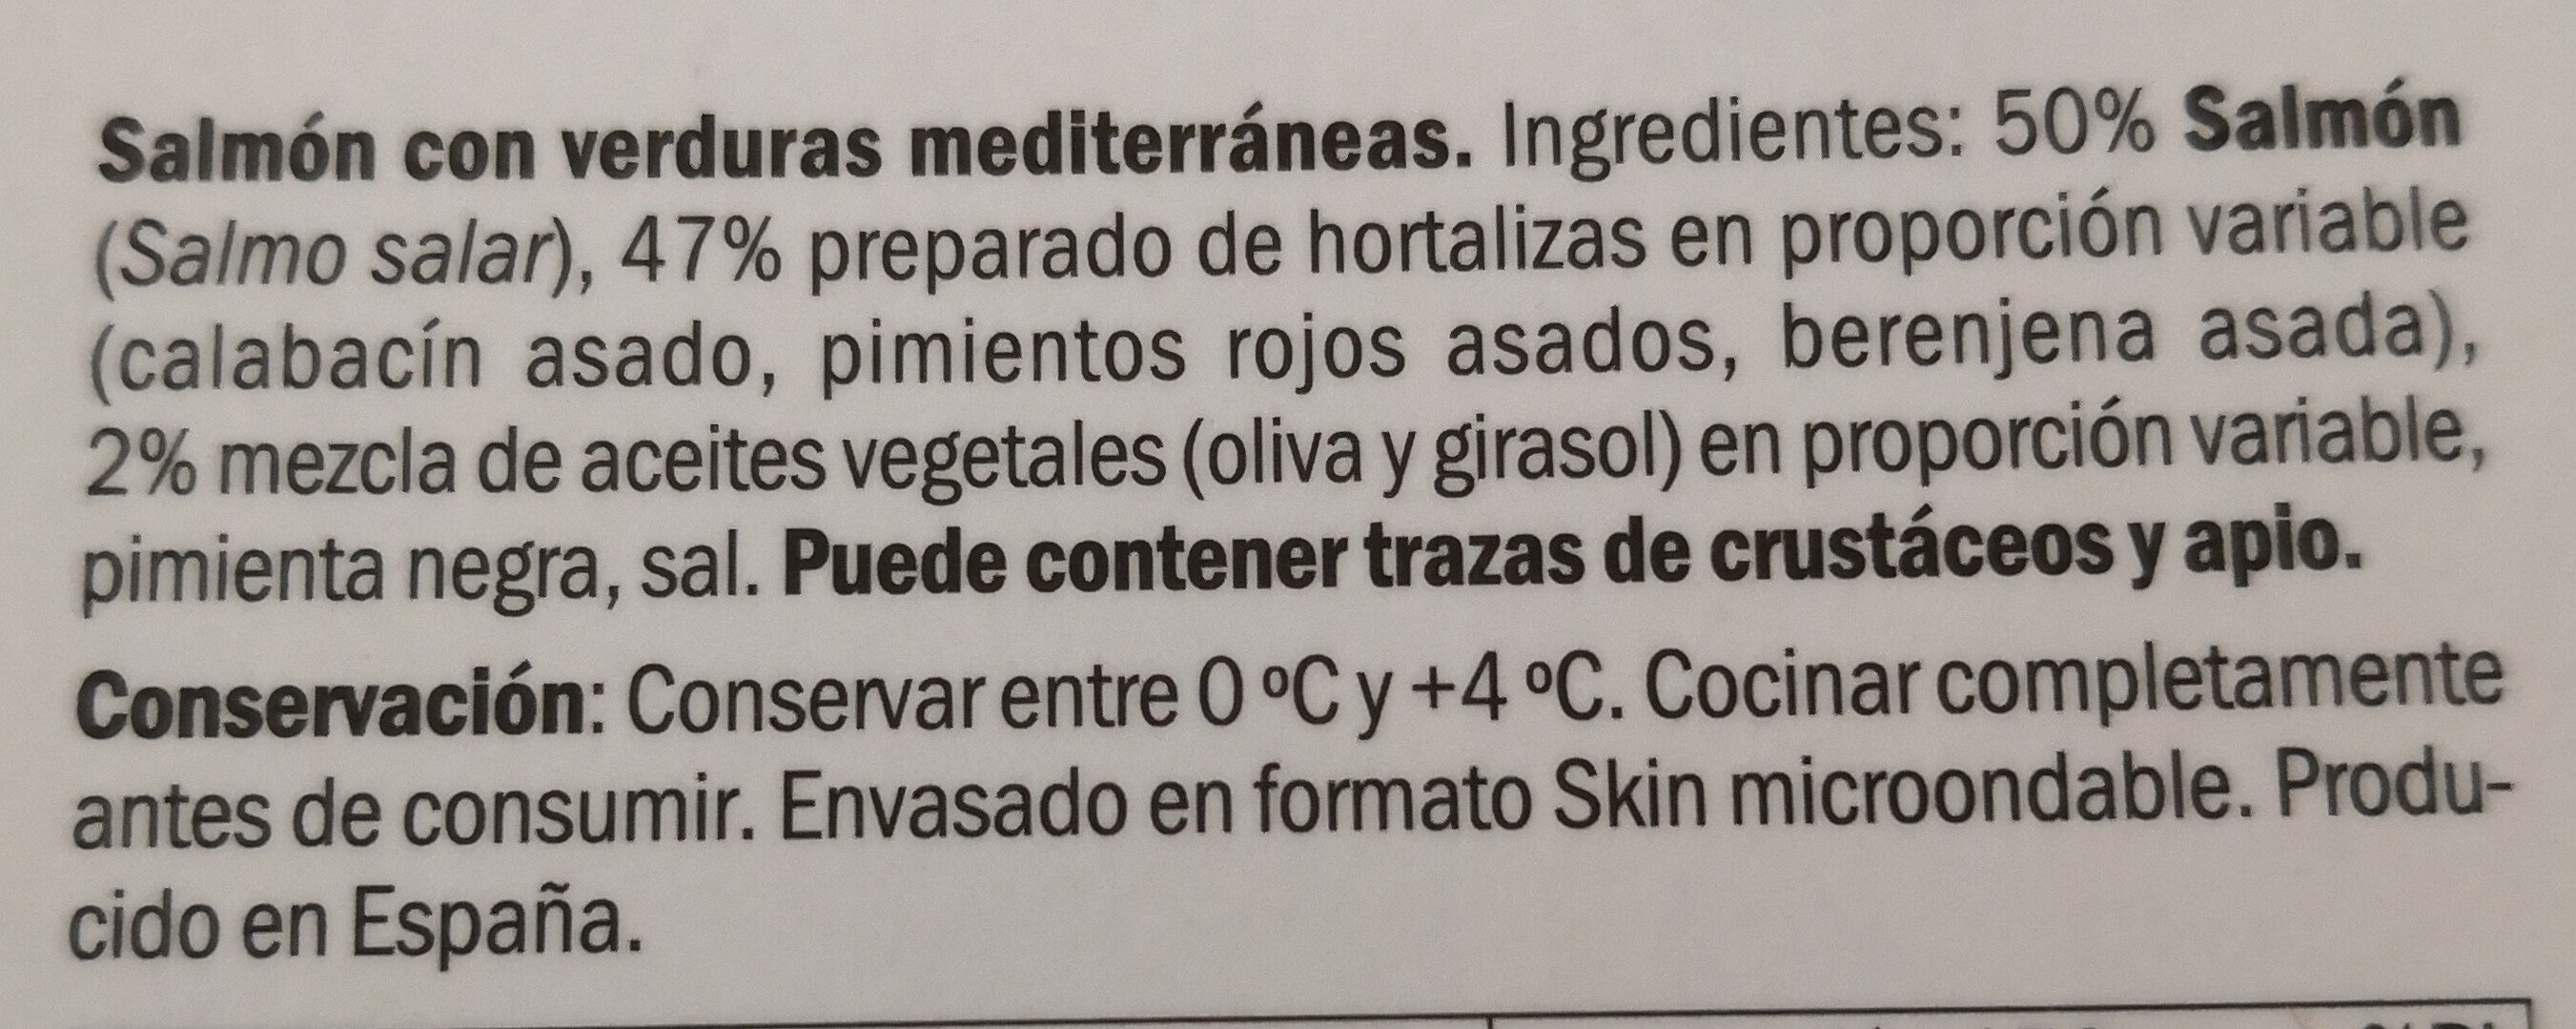 Salmón para cocinar al vapor verduras mediterráneas - Ingredientes